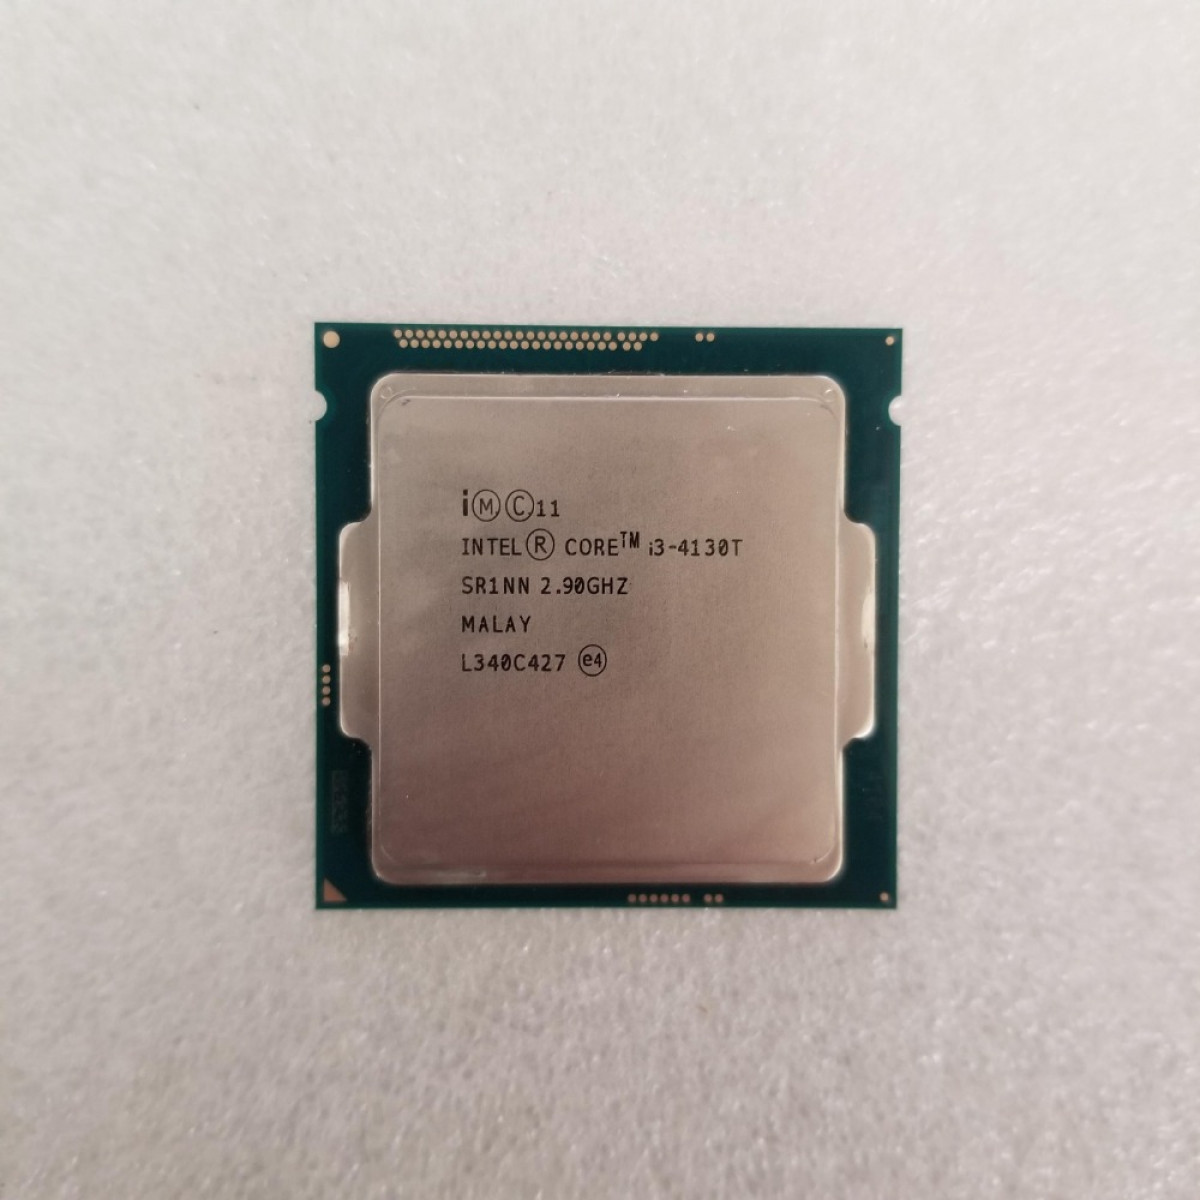 Intel Core i3 4130 T i3-4130T Cache 3M 2.90 GHz LGA1150